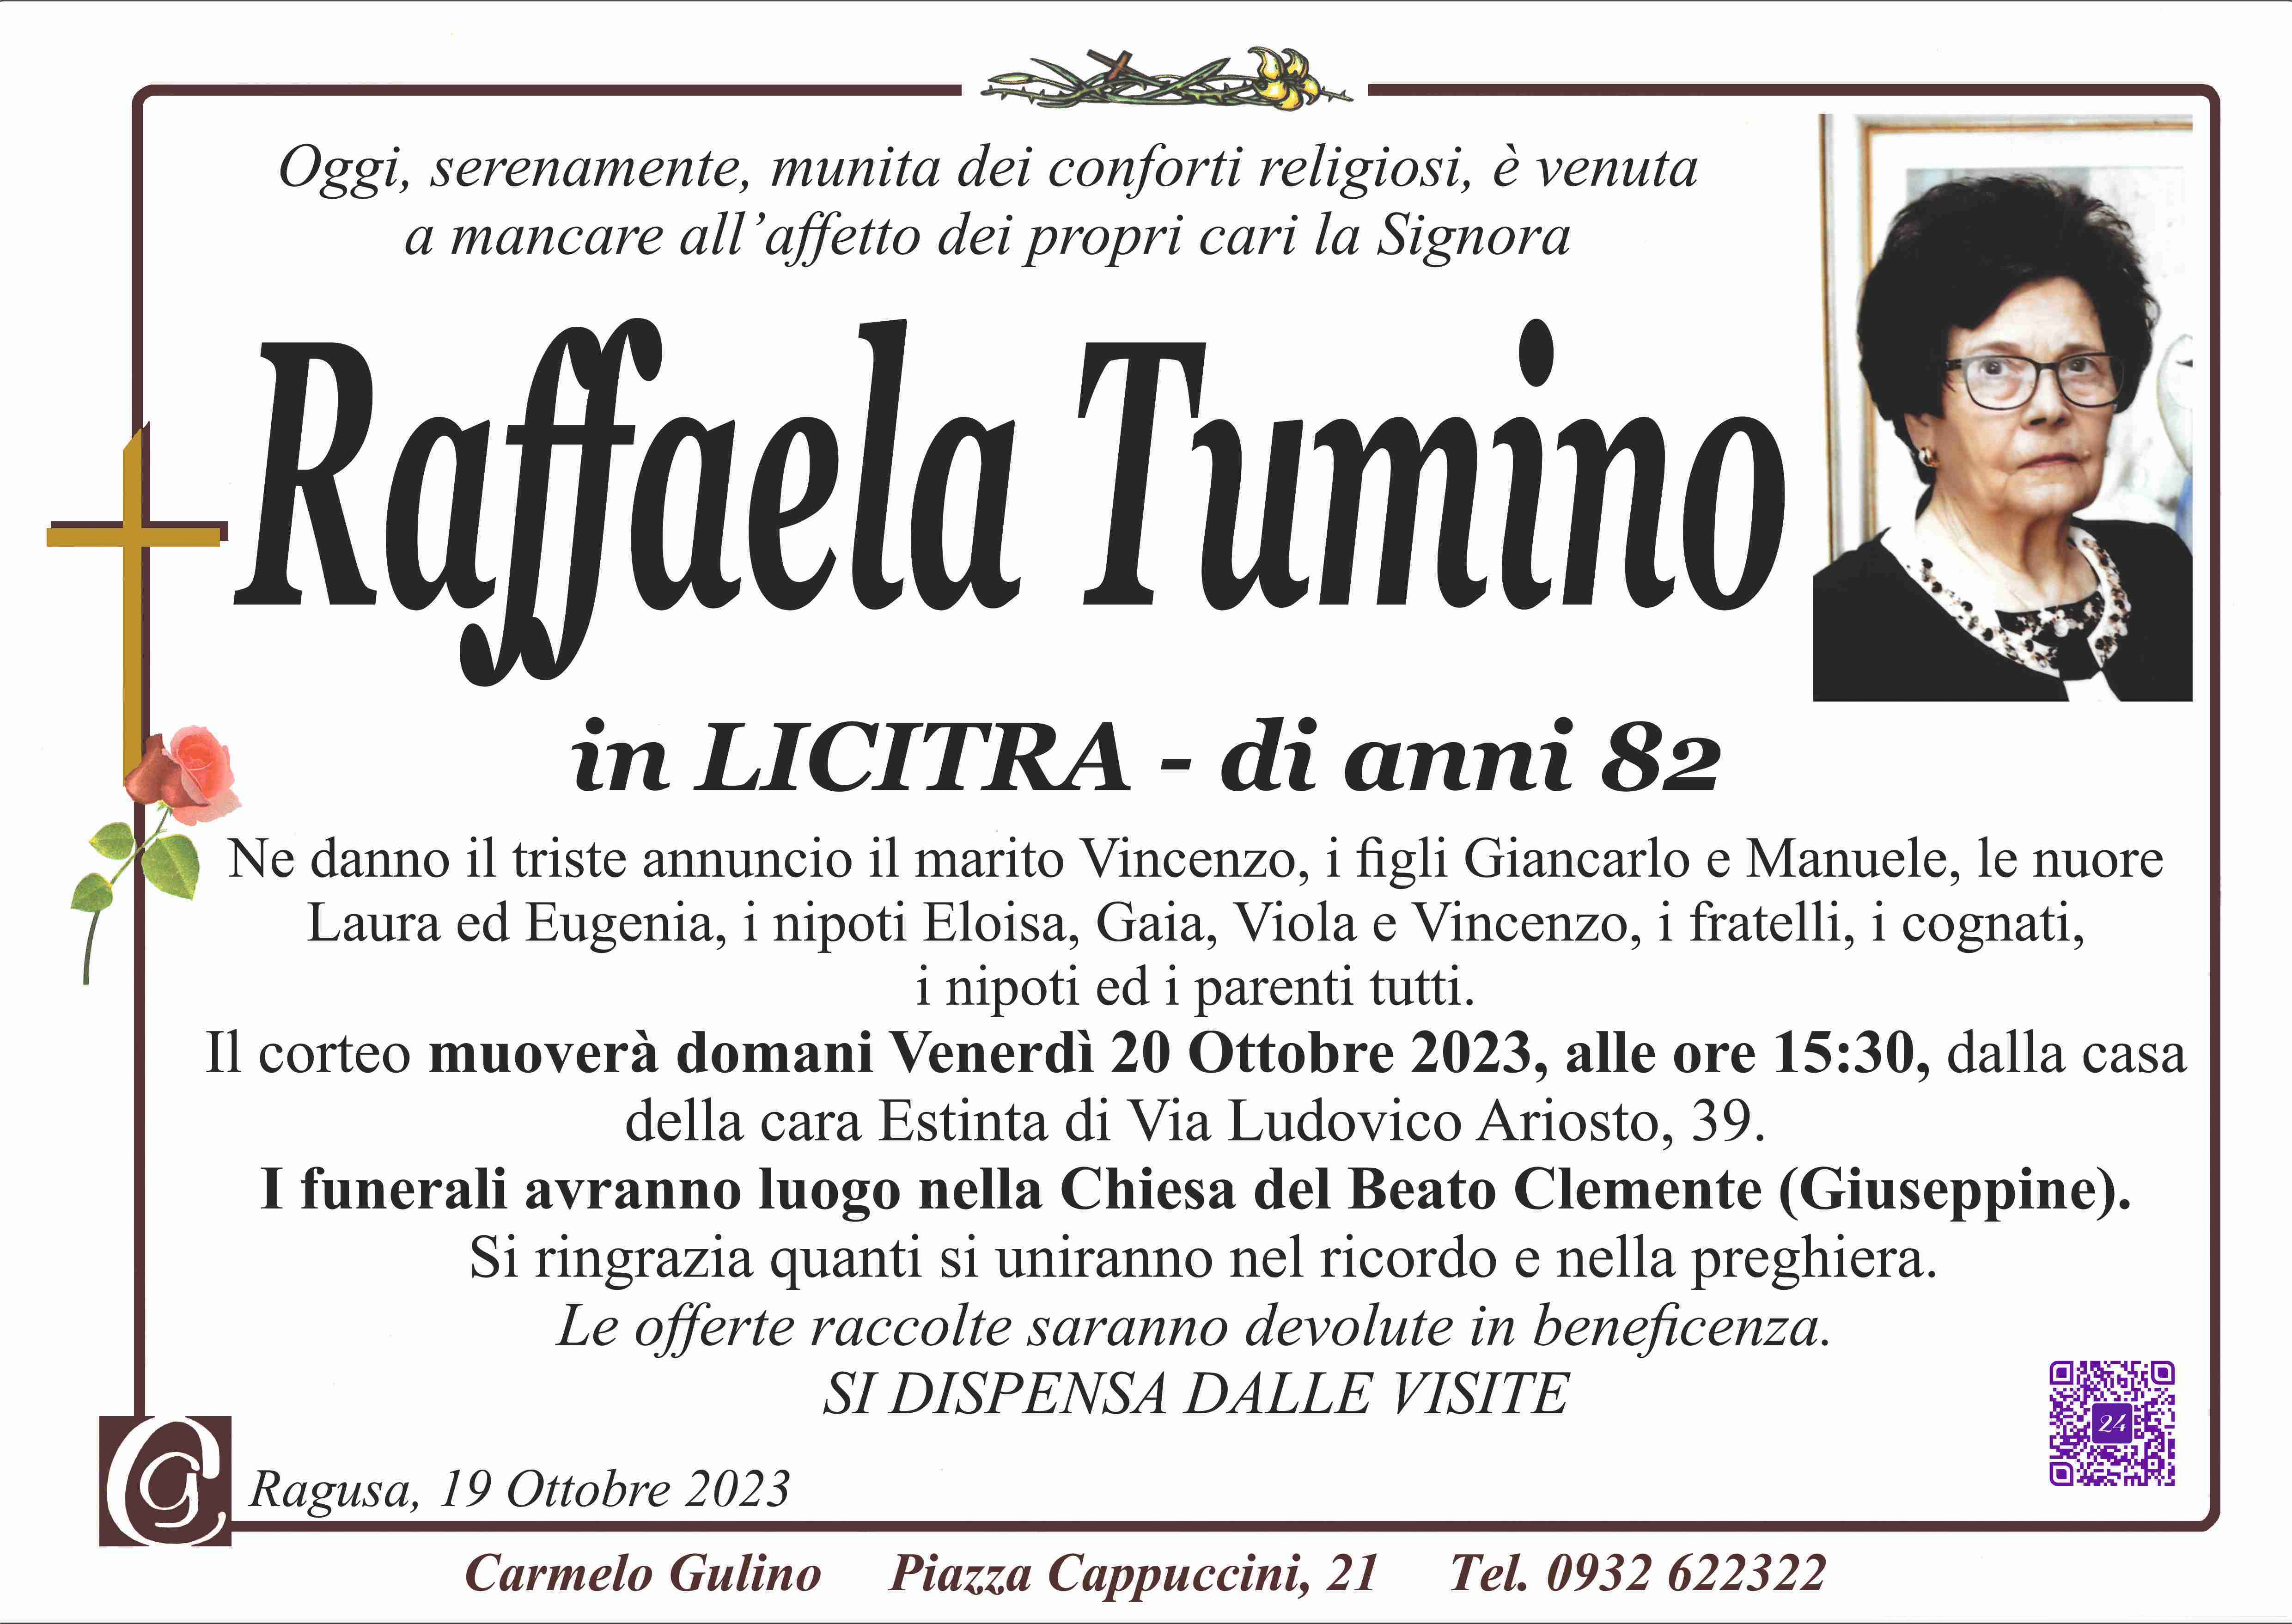 Raffaela Tumino